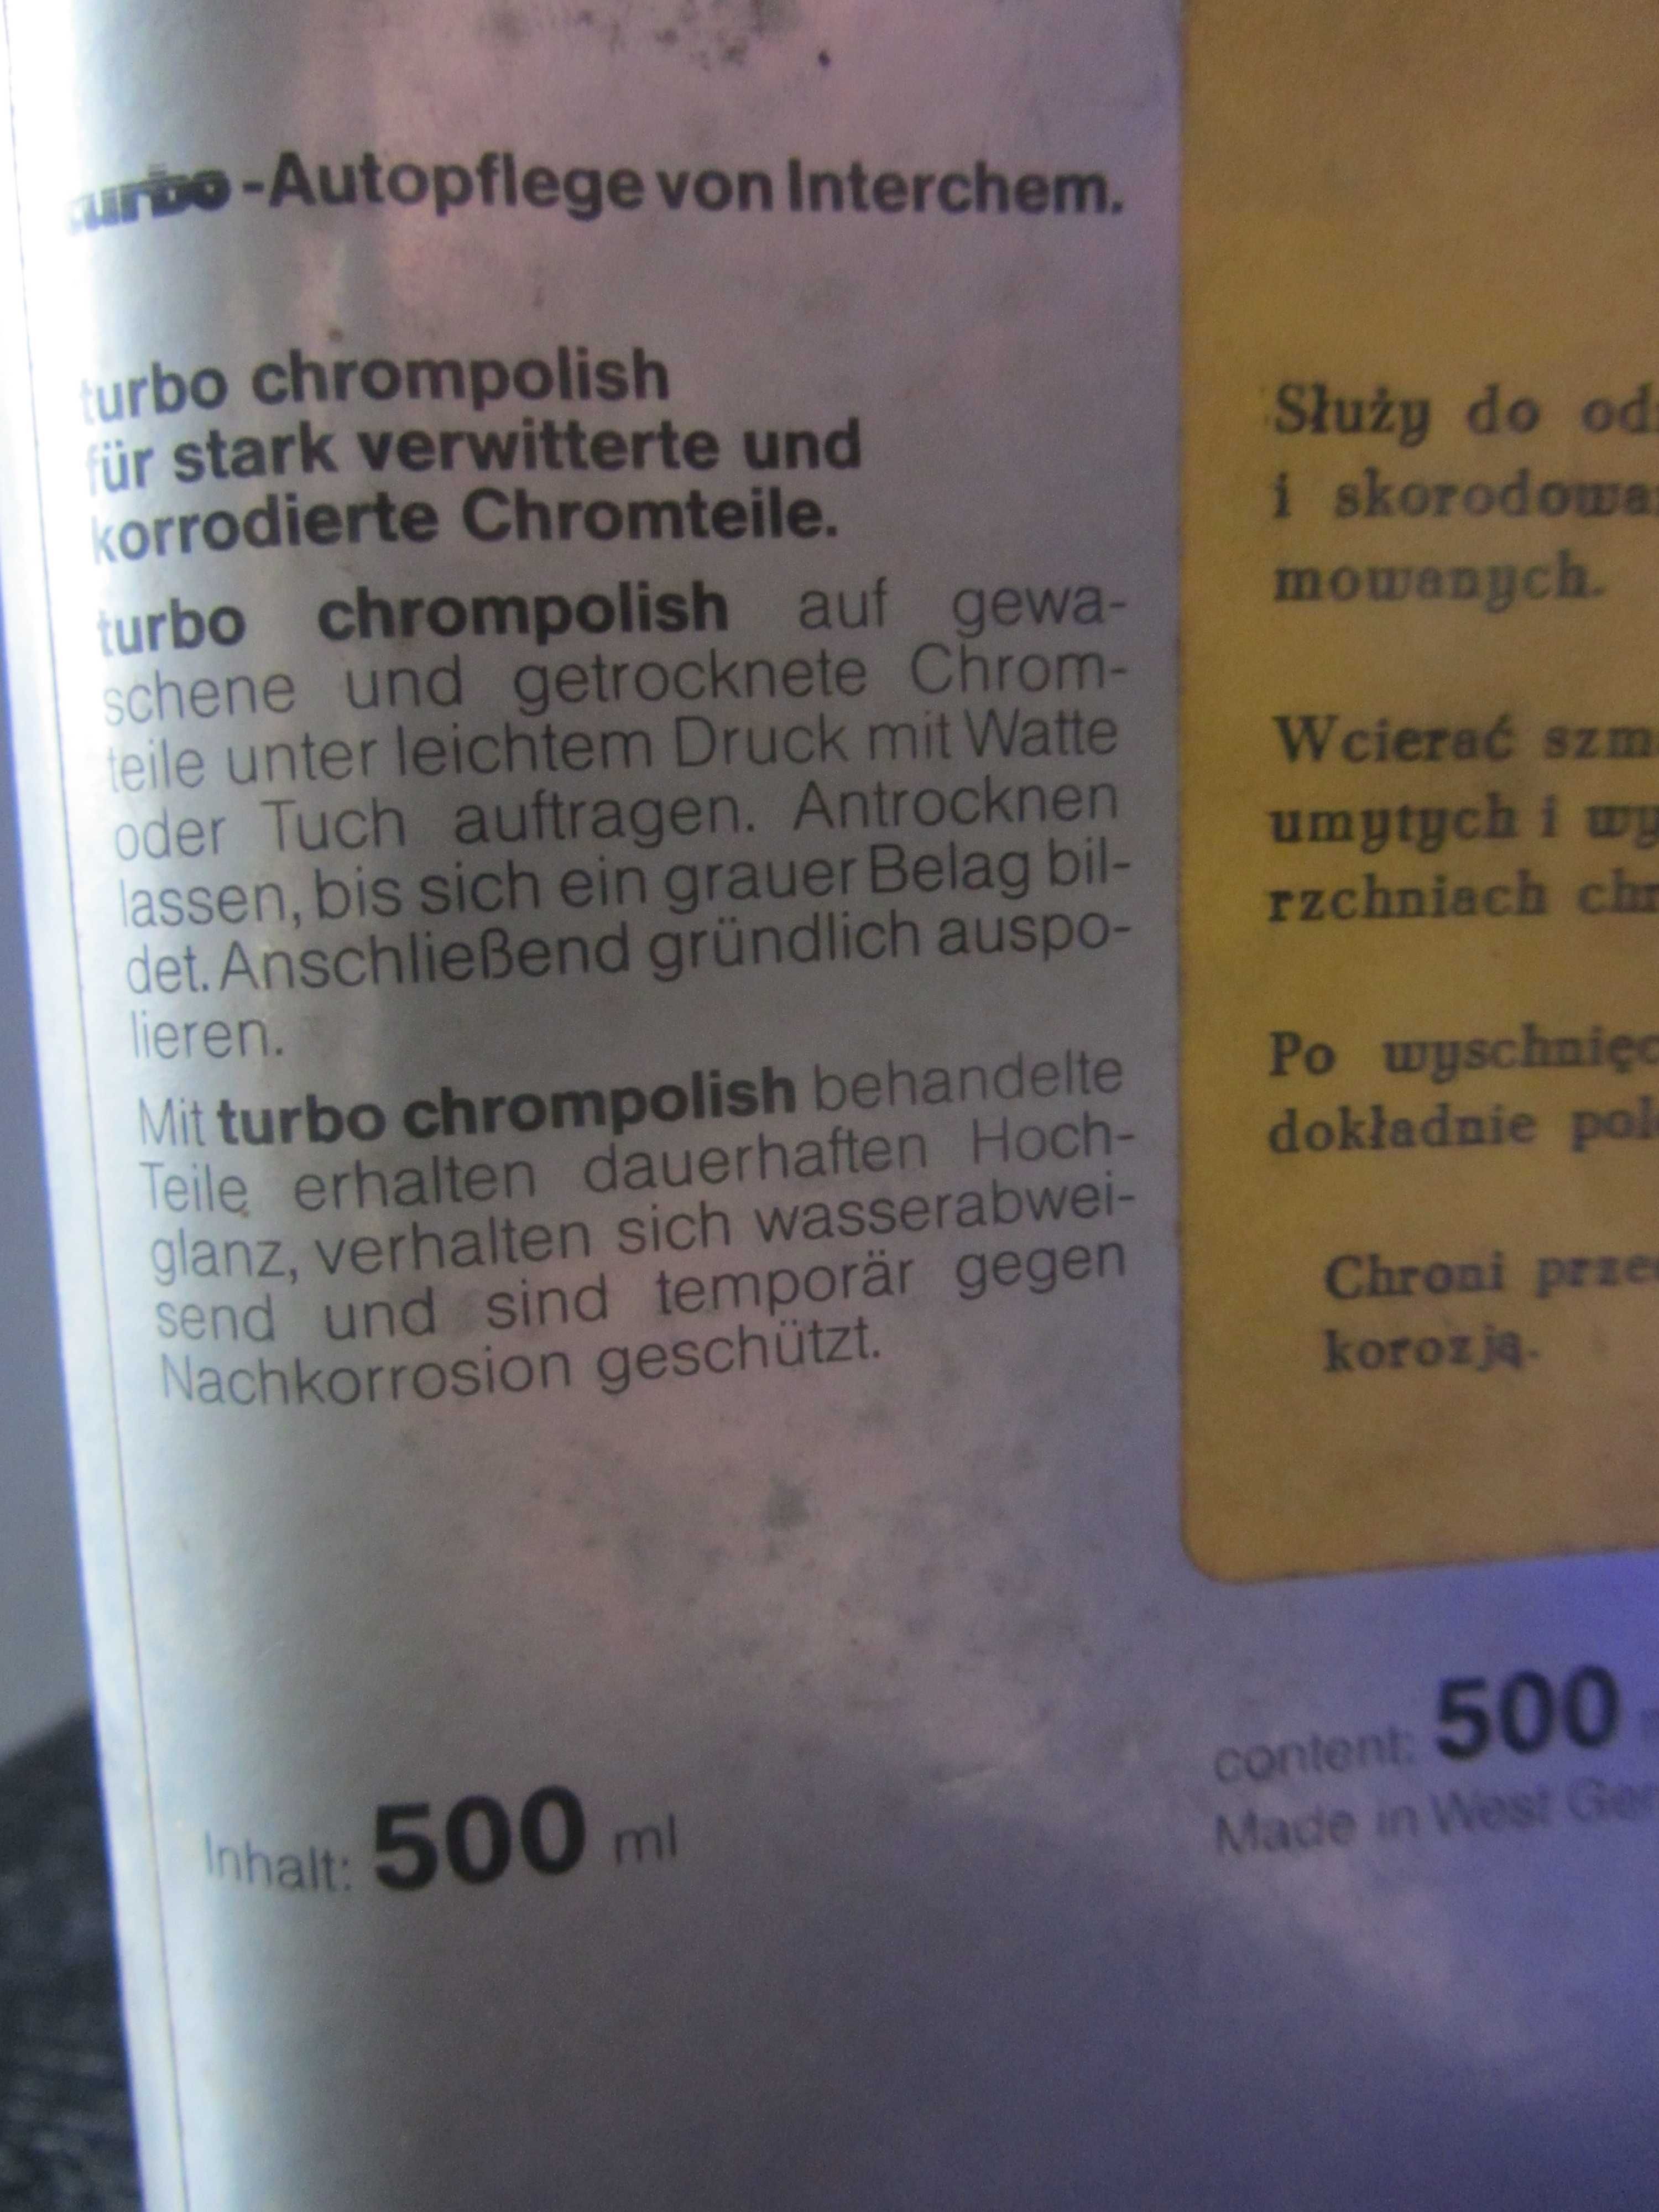 pasta do chromu turbo chrome-polish chrompolish ma ponad 40 lat !!!